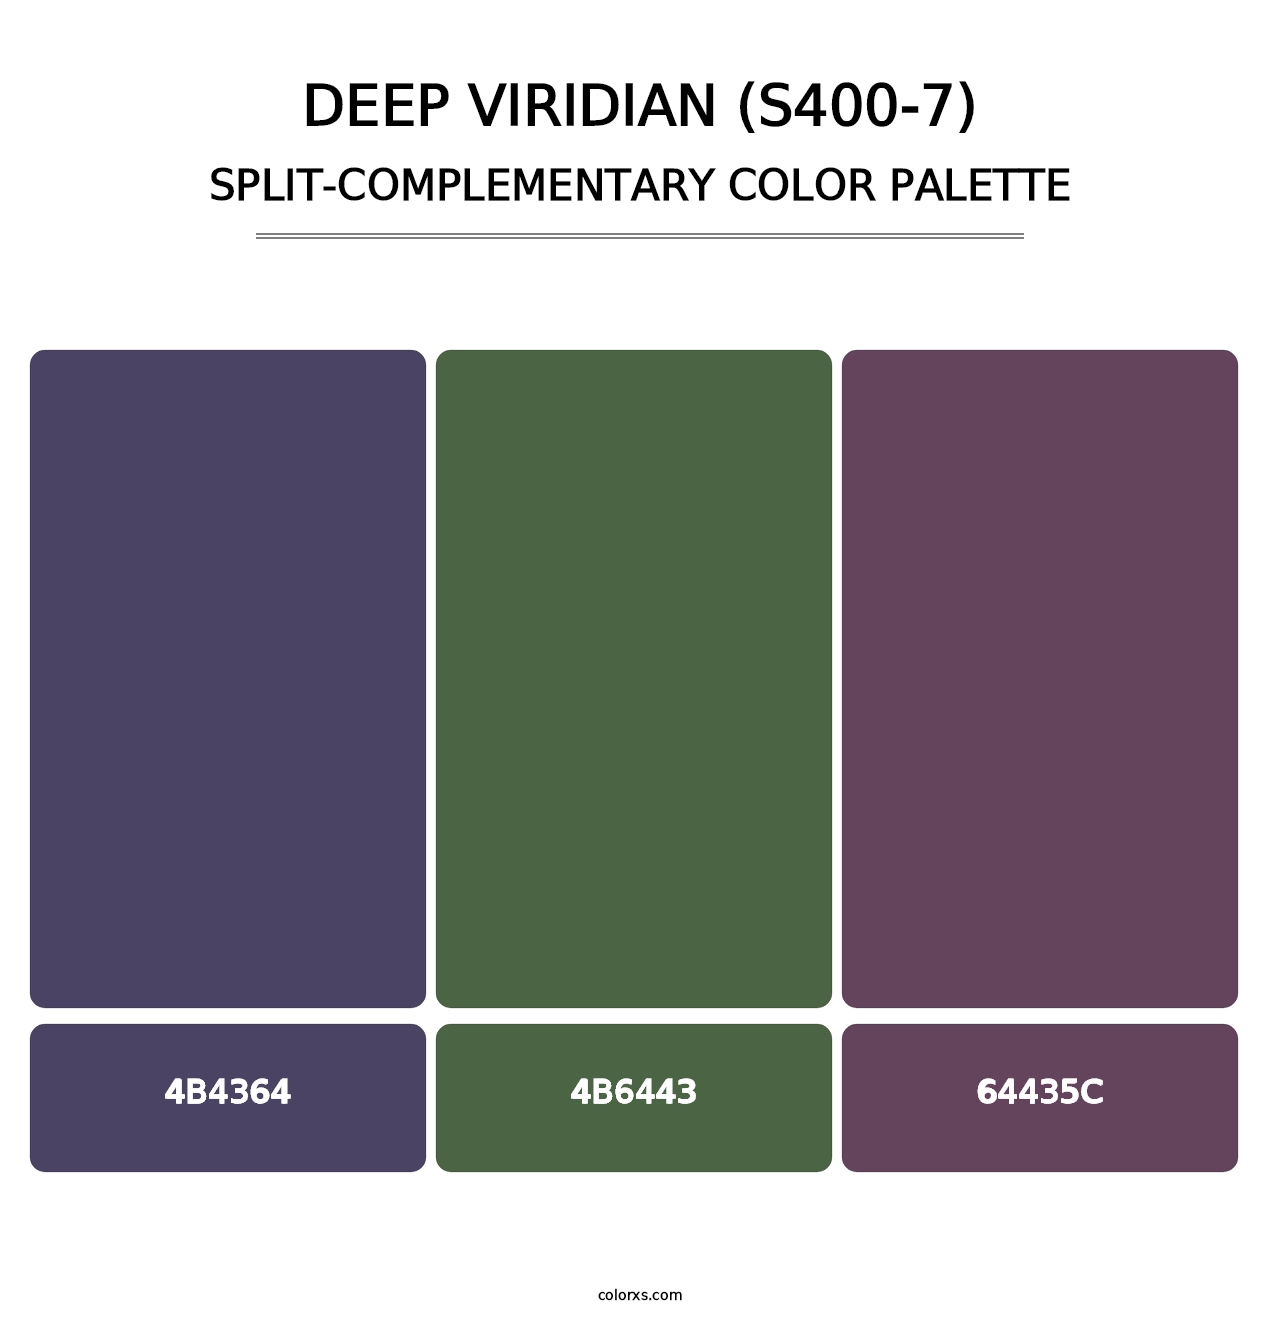 Deep Viridian (S400-7) - Split-Complementary Color Palette